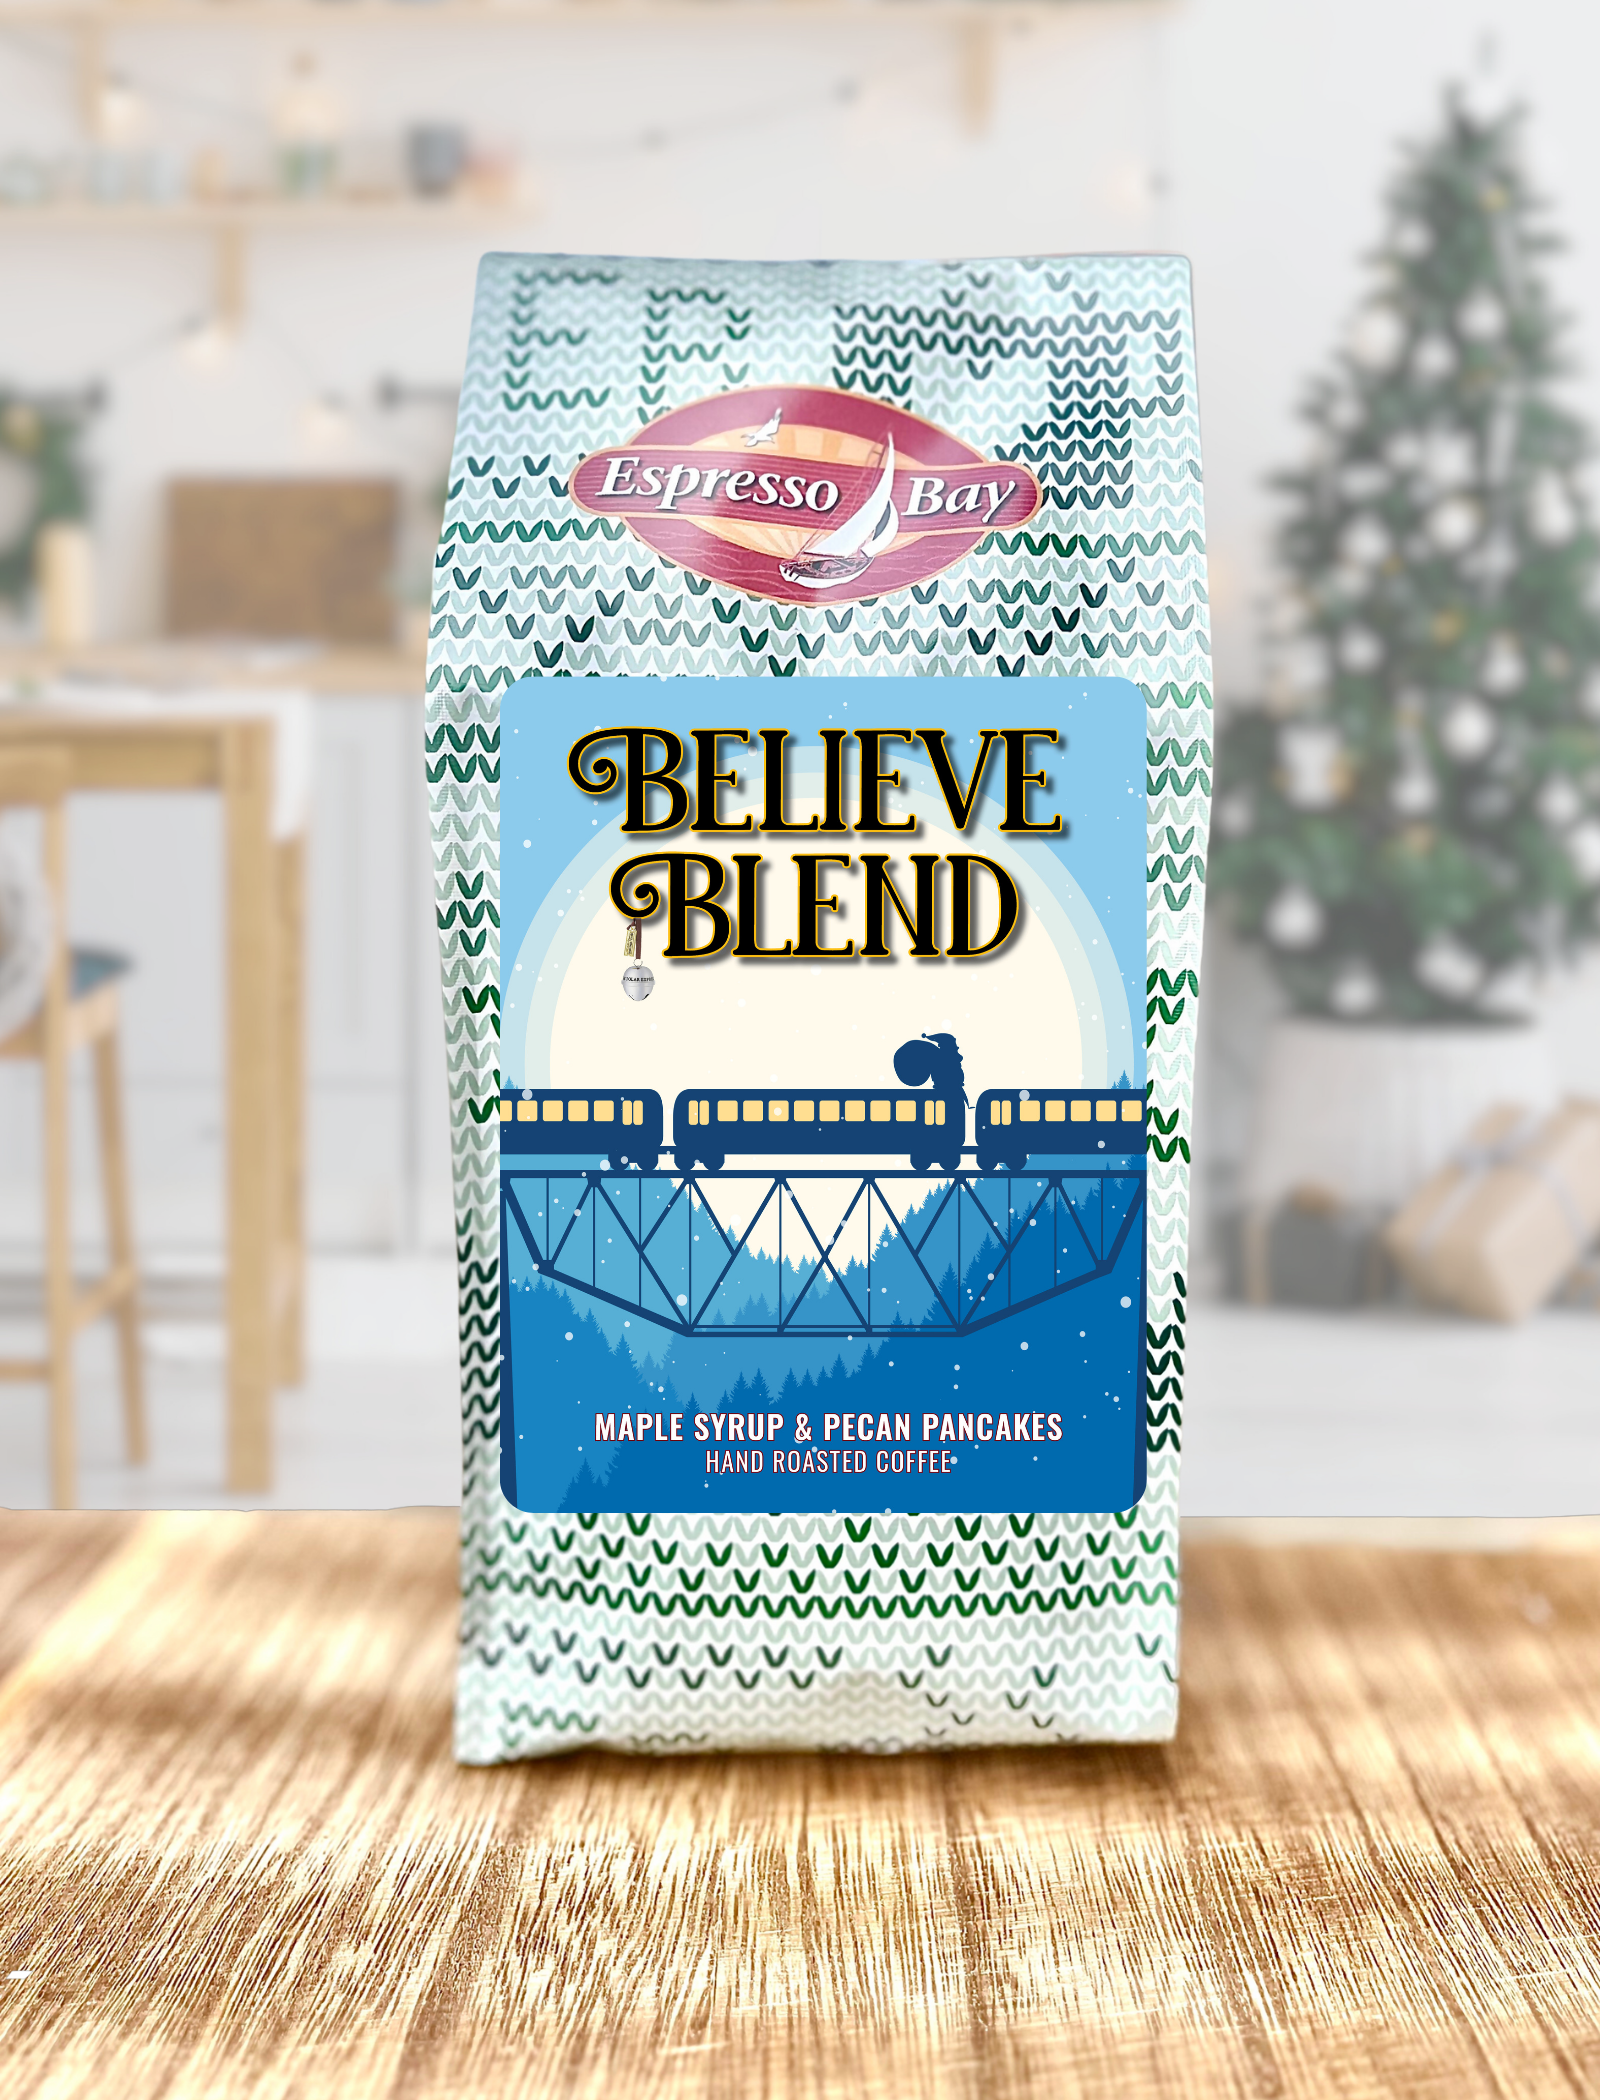 Believe Blend – Espresso Bay